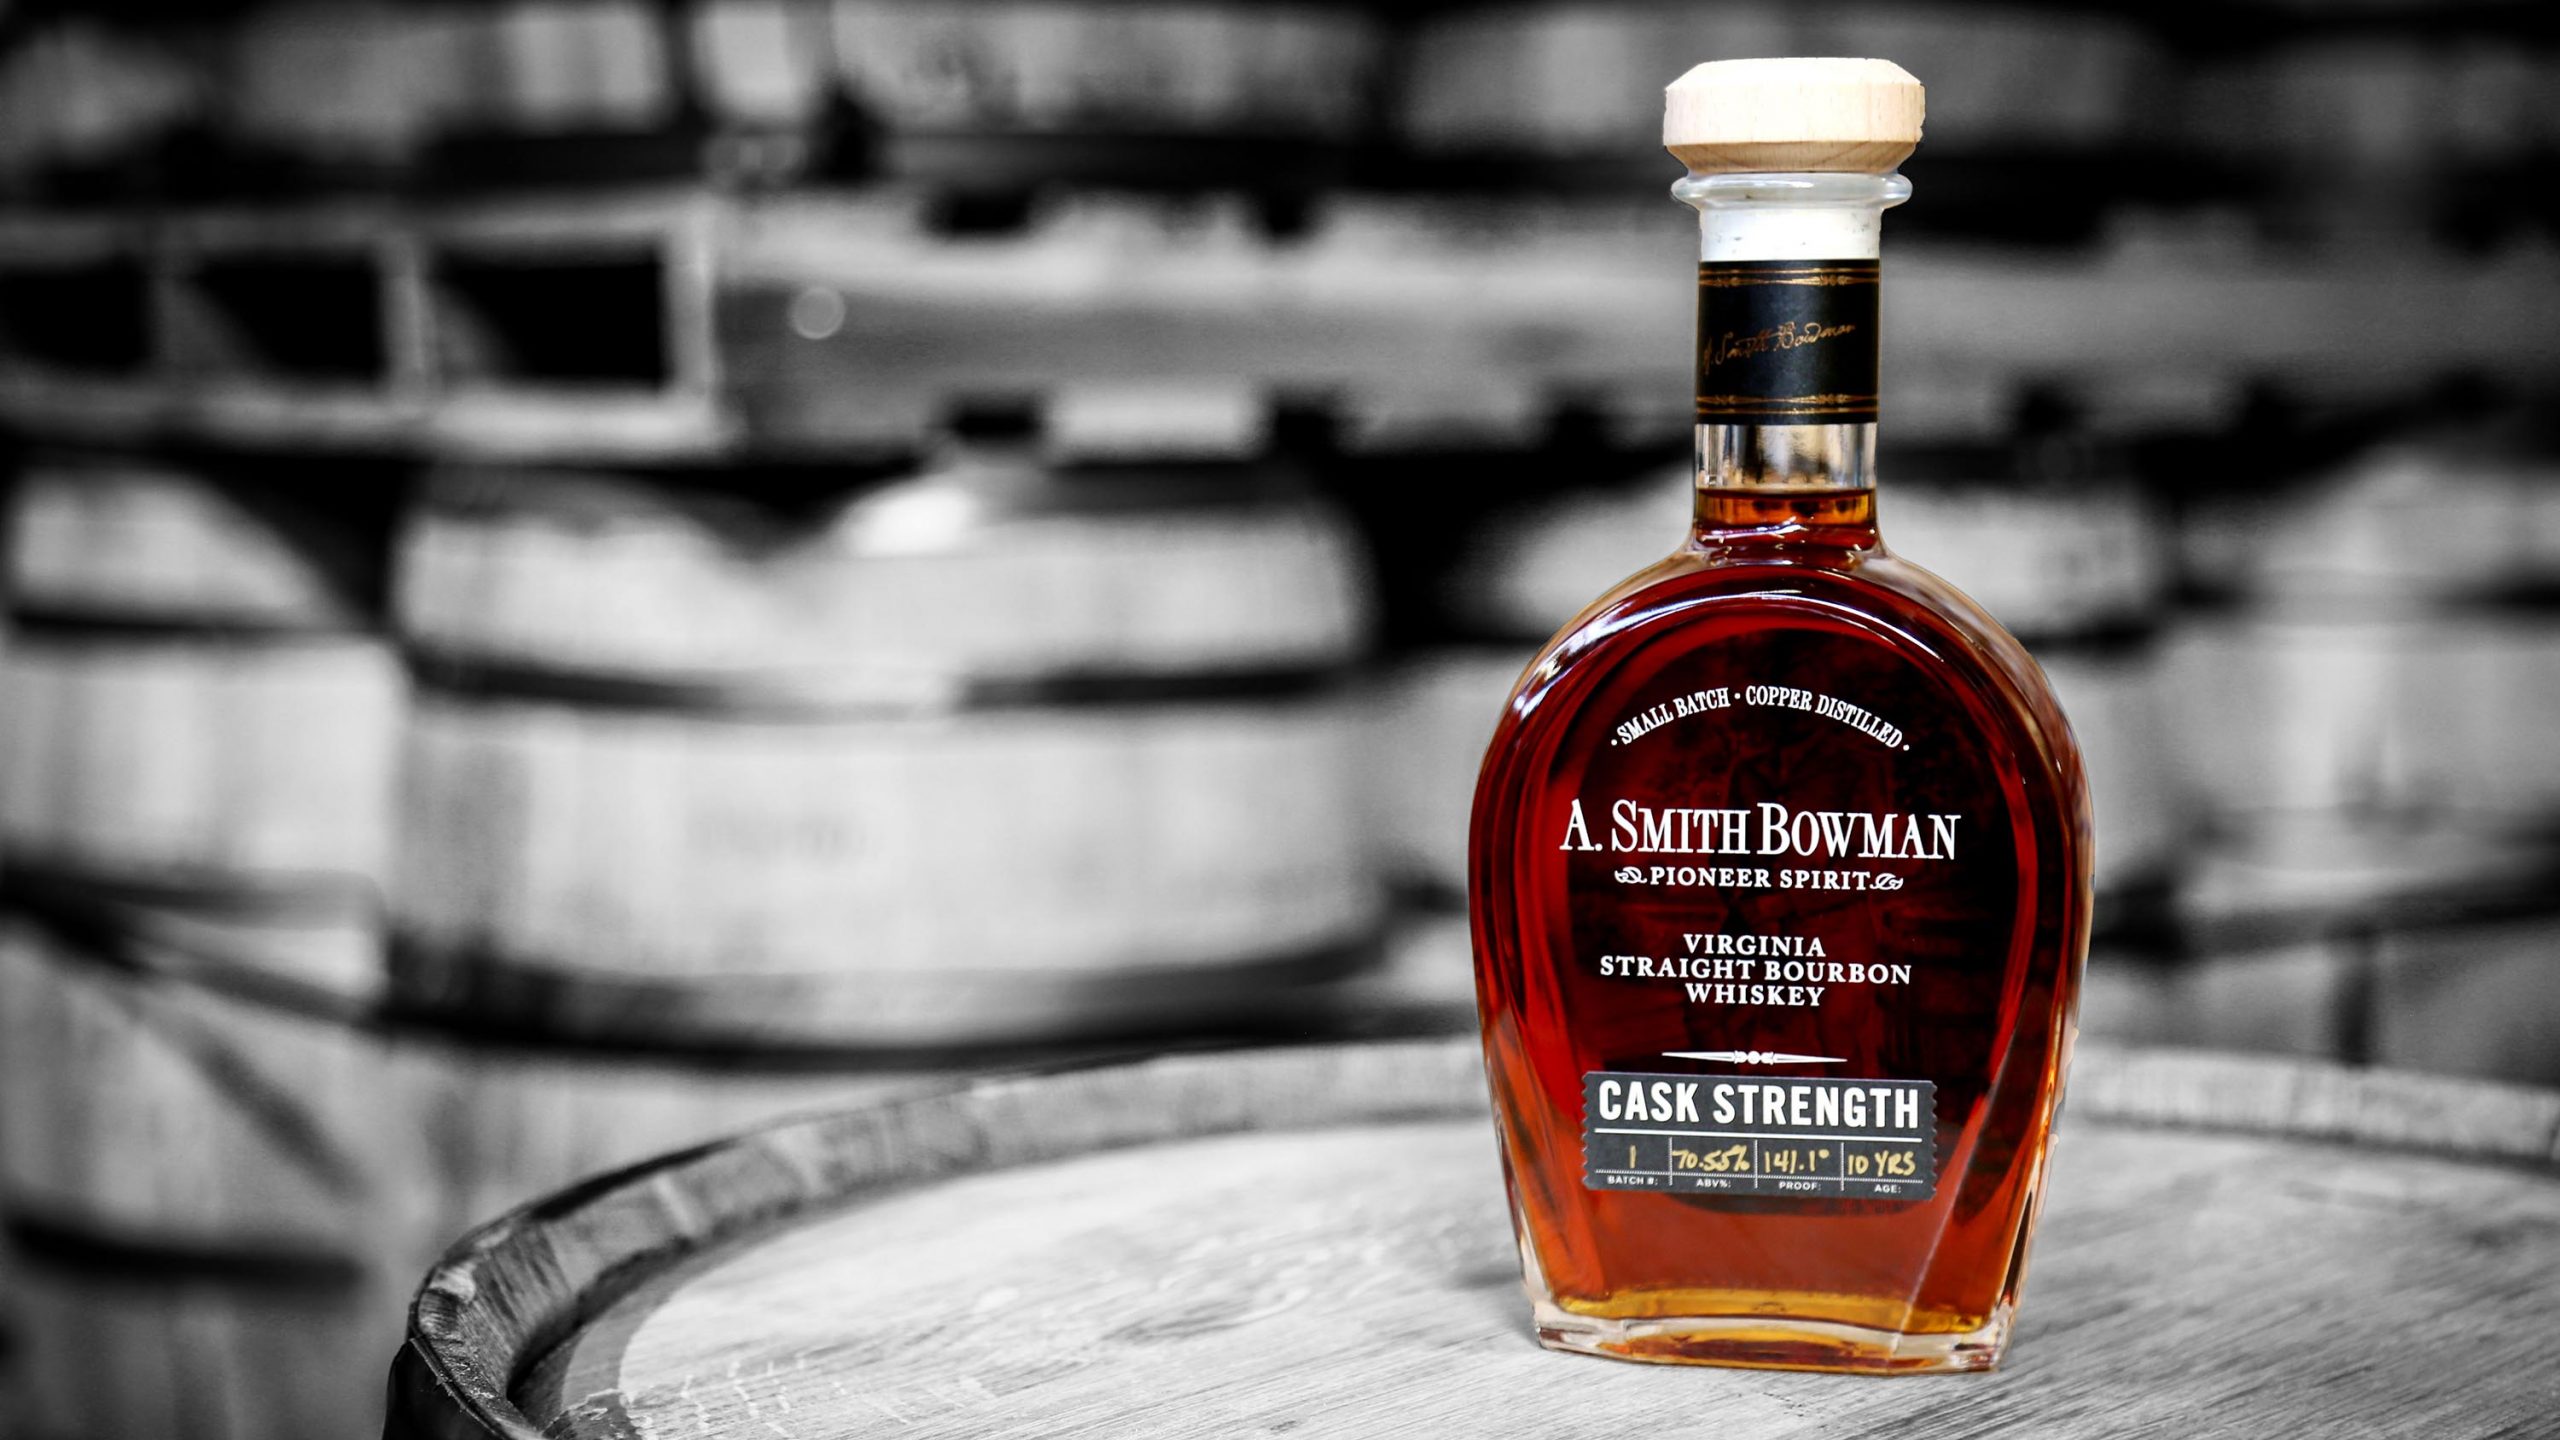 A. Smith Bowman Cask Strength Bourbon